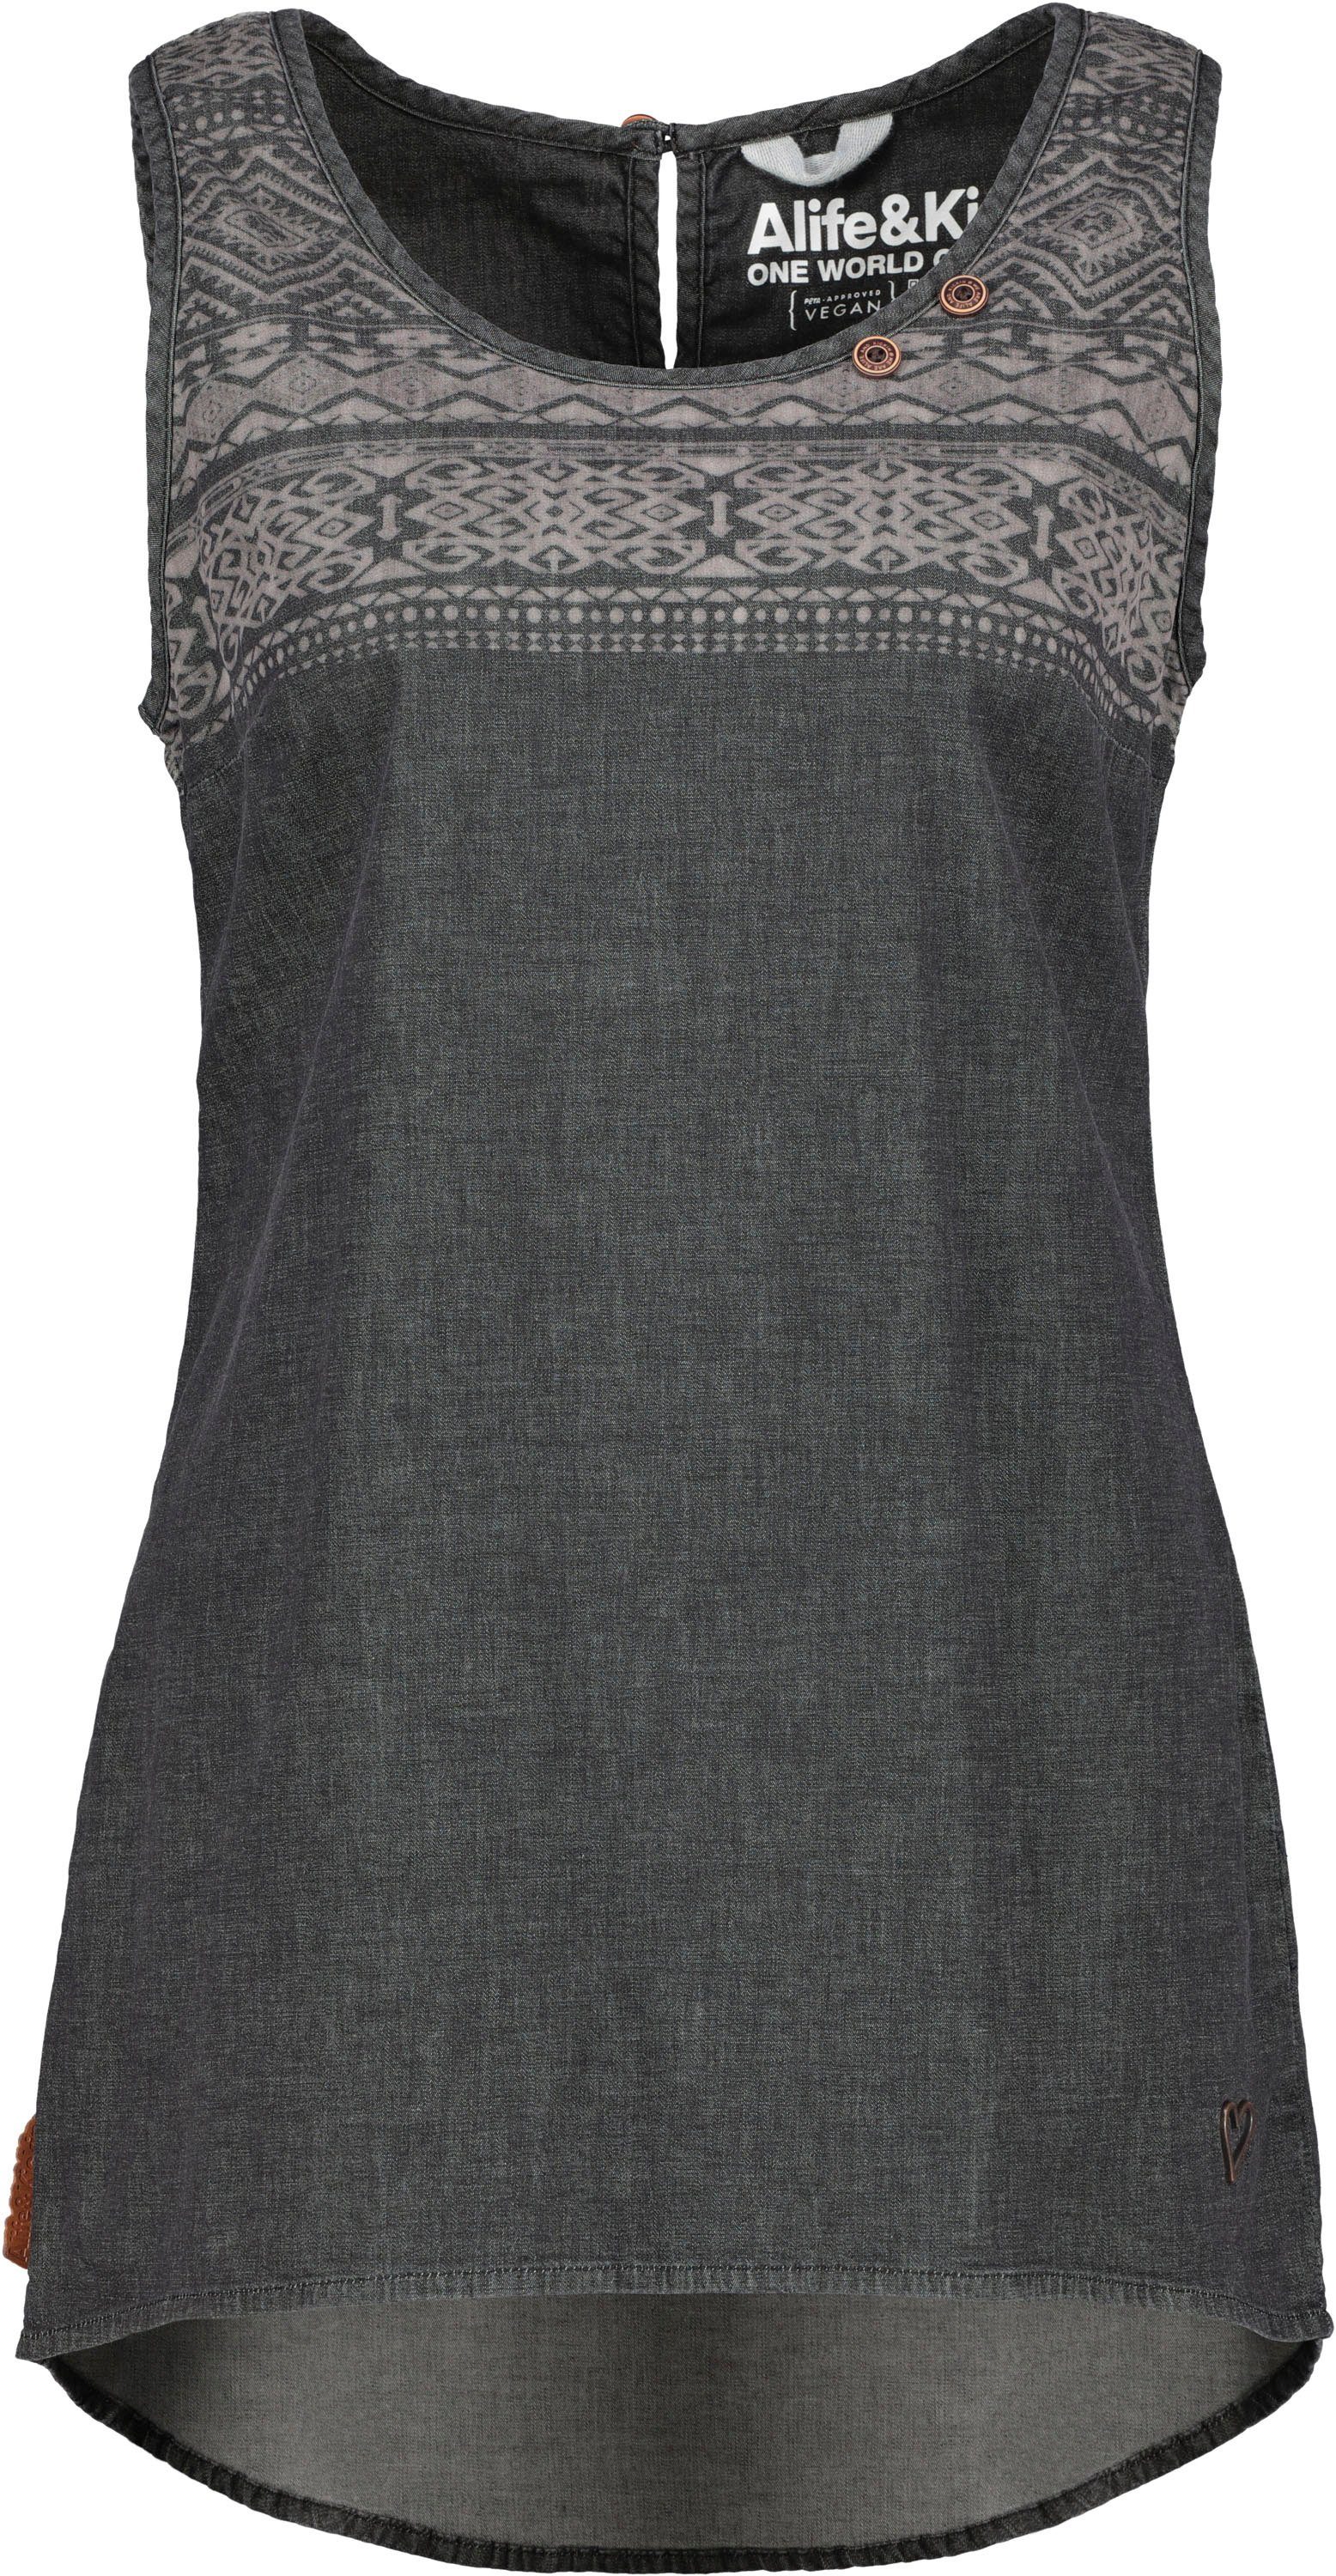 Jeansbluse in Denim-Top denim CarliAK Spitzen-Optik, & mit Print black Stretch-Qualität Kickin print Alife Print feminines